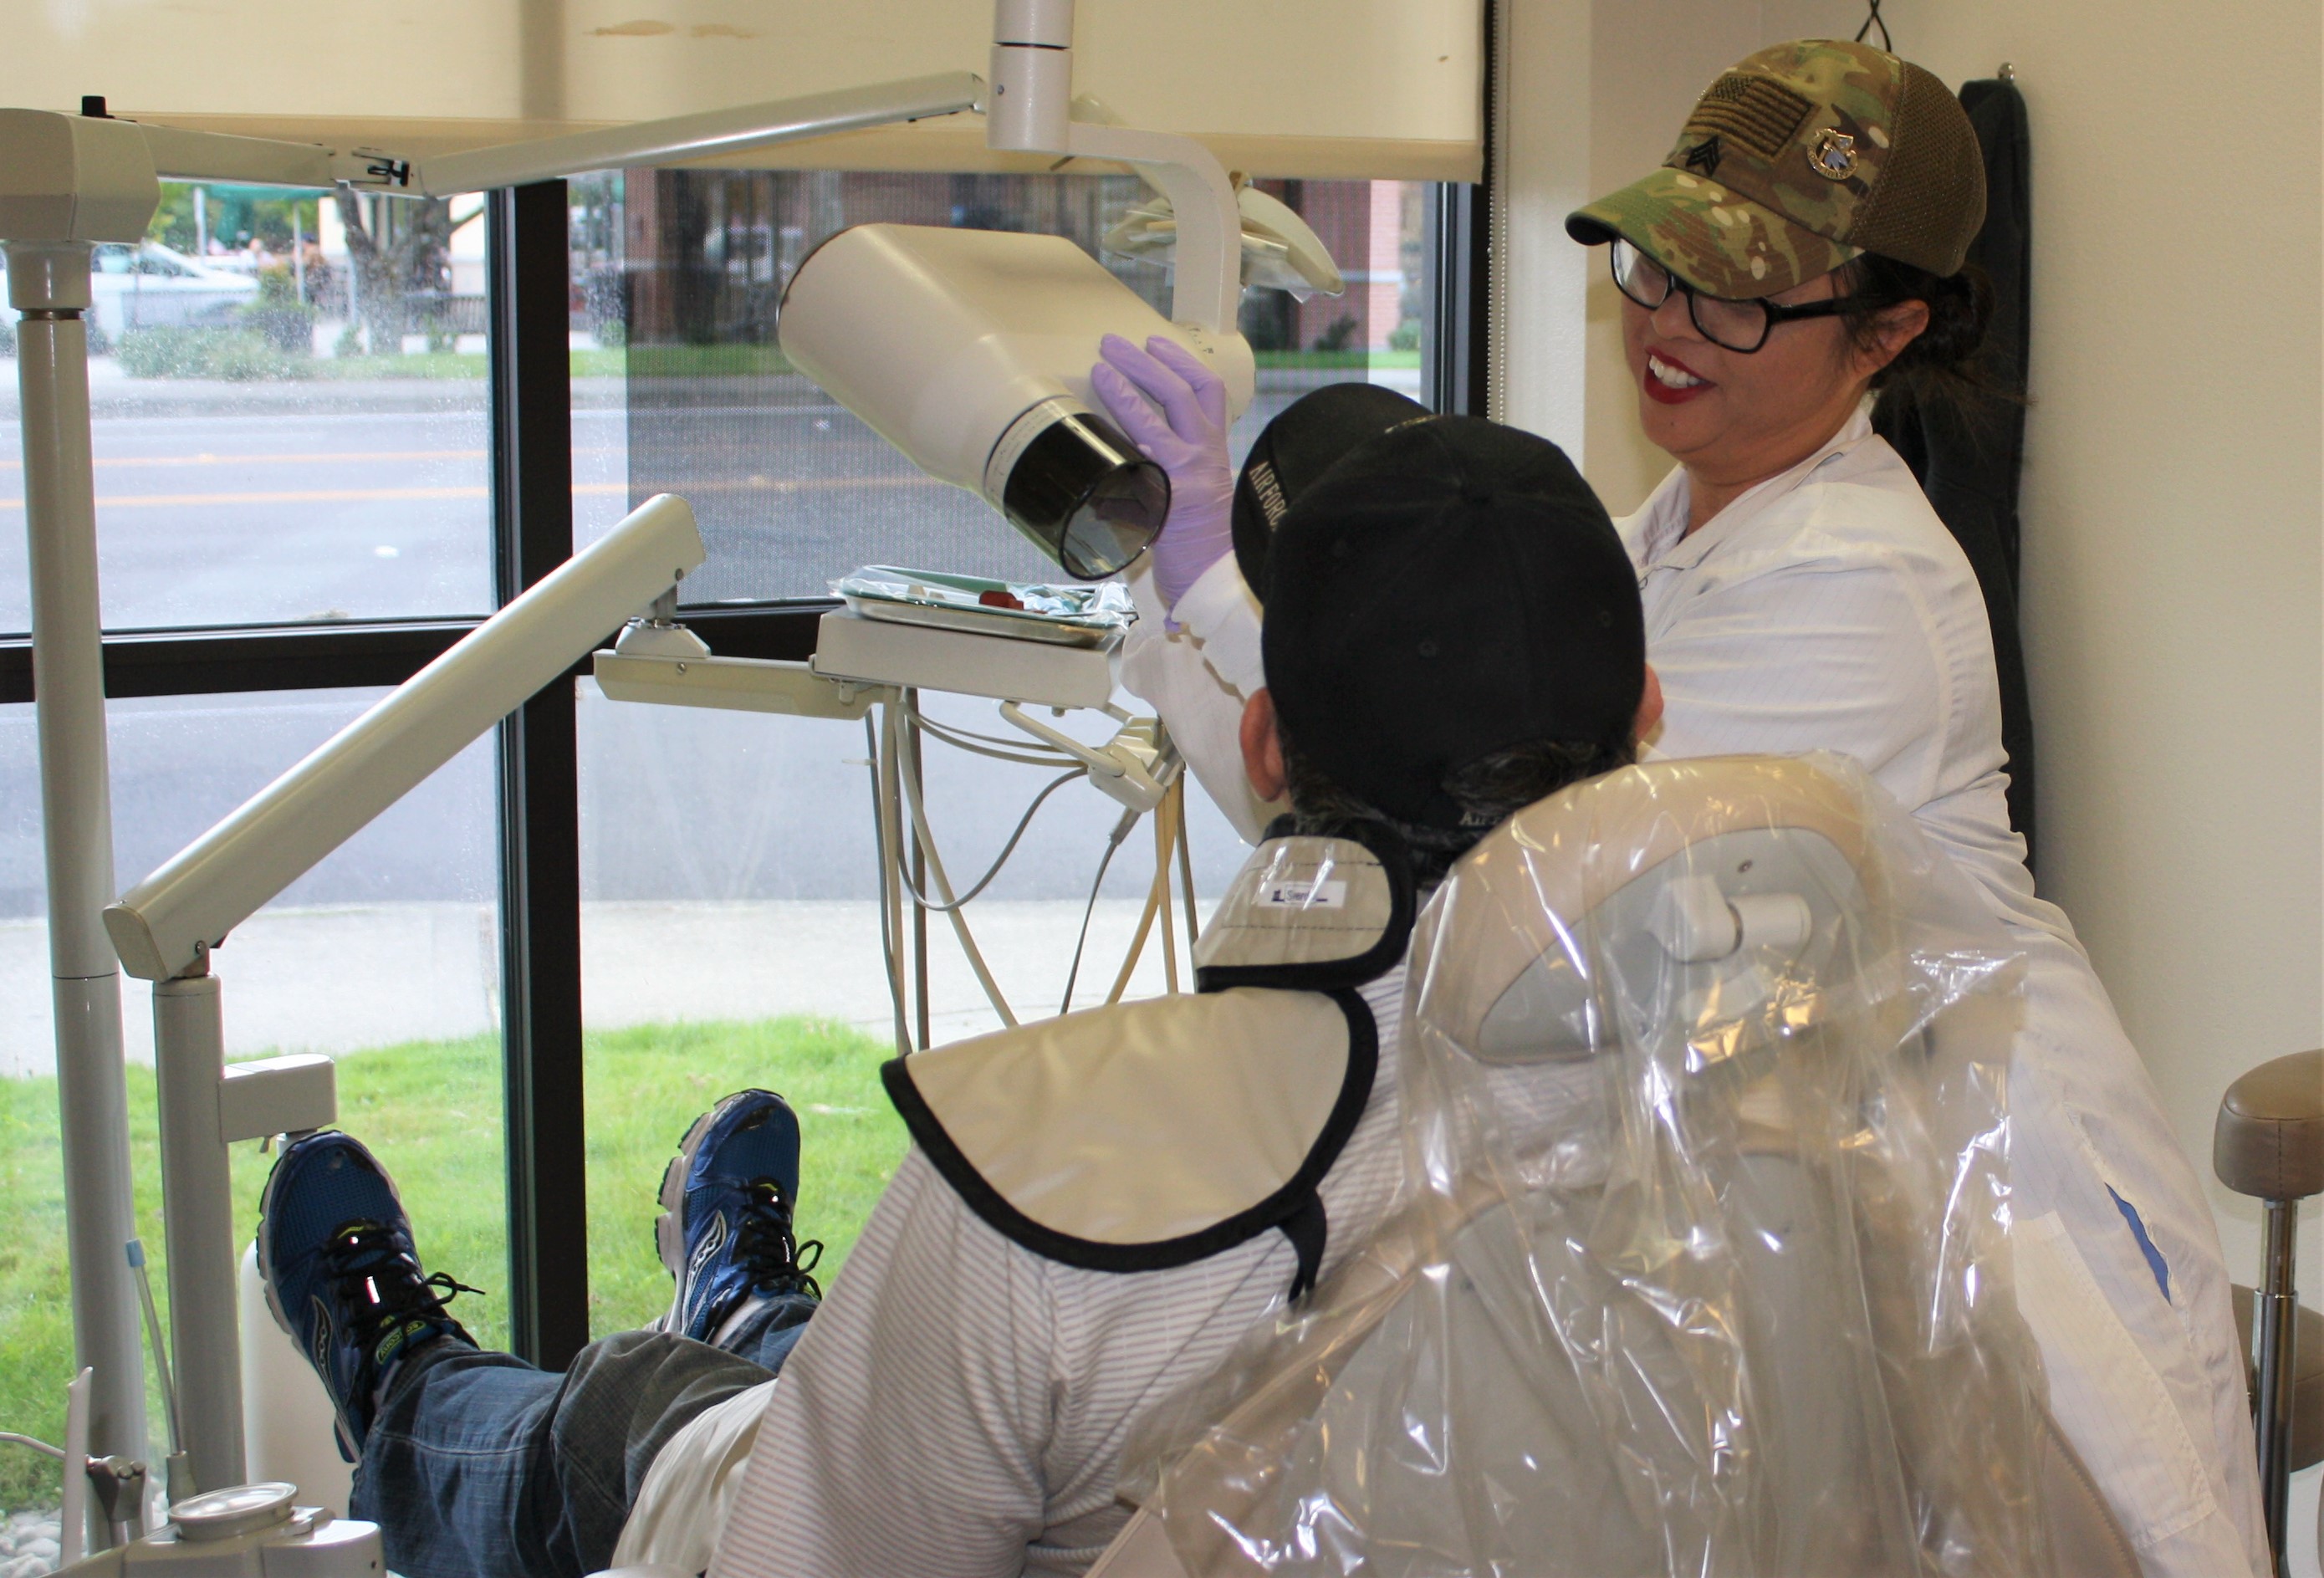 Providing dental care to Veterans